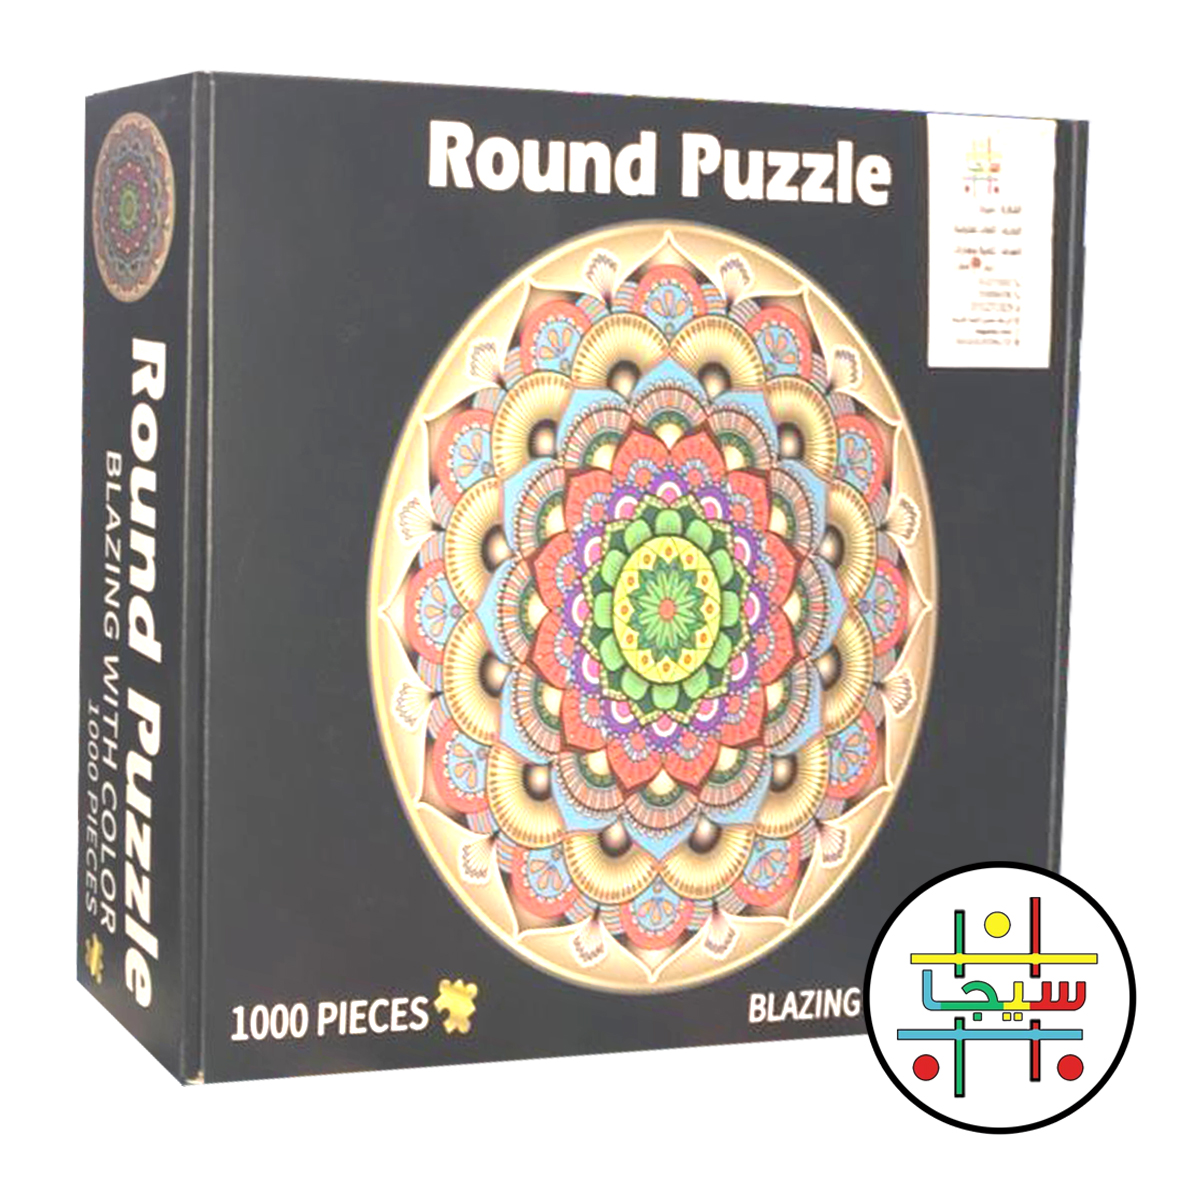 بازل Round Puzzle 1000 pcs